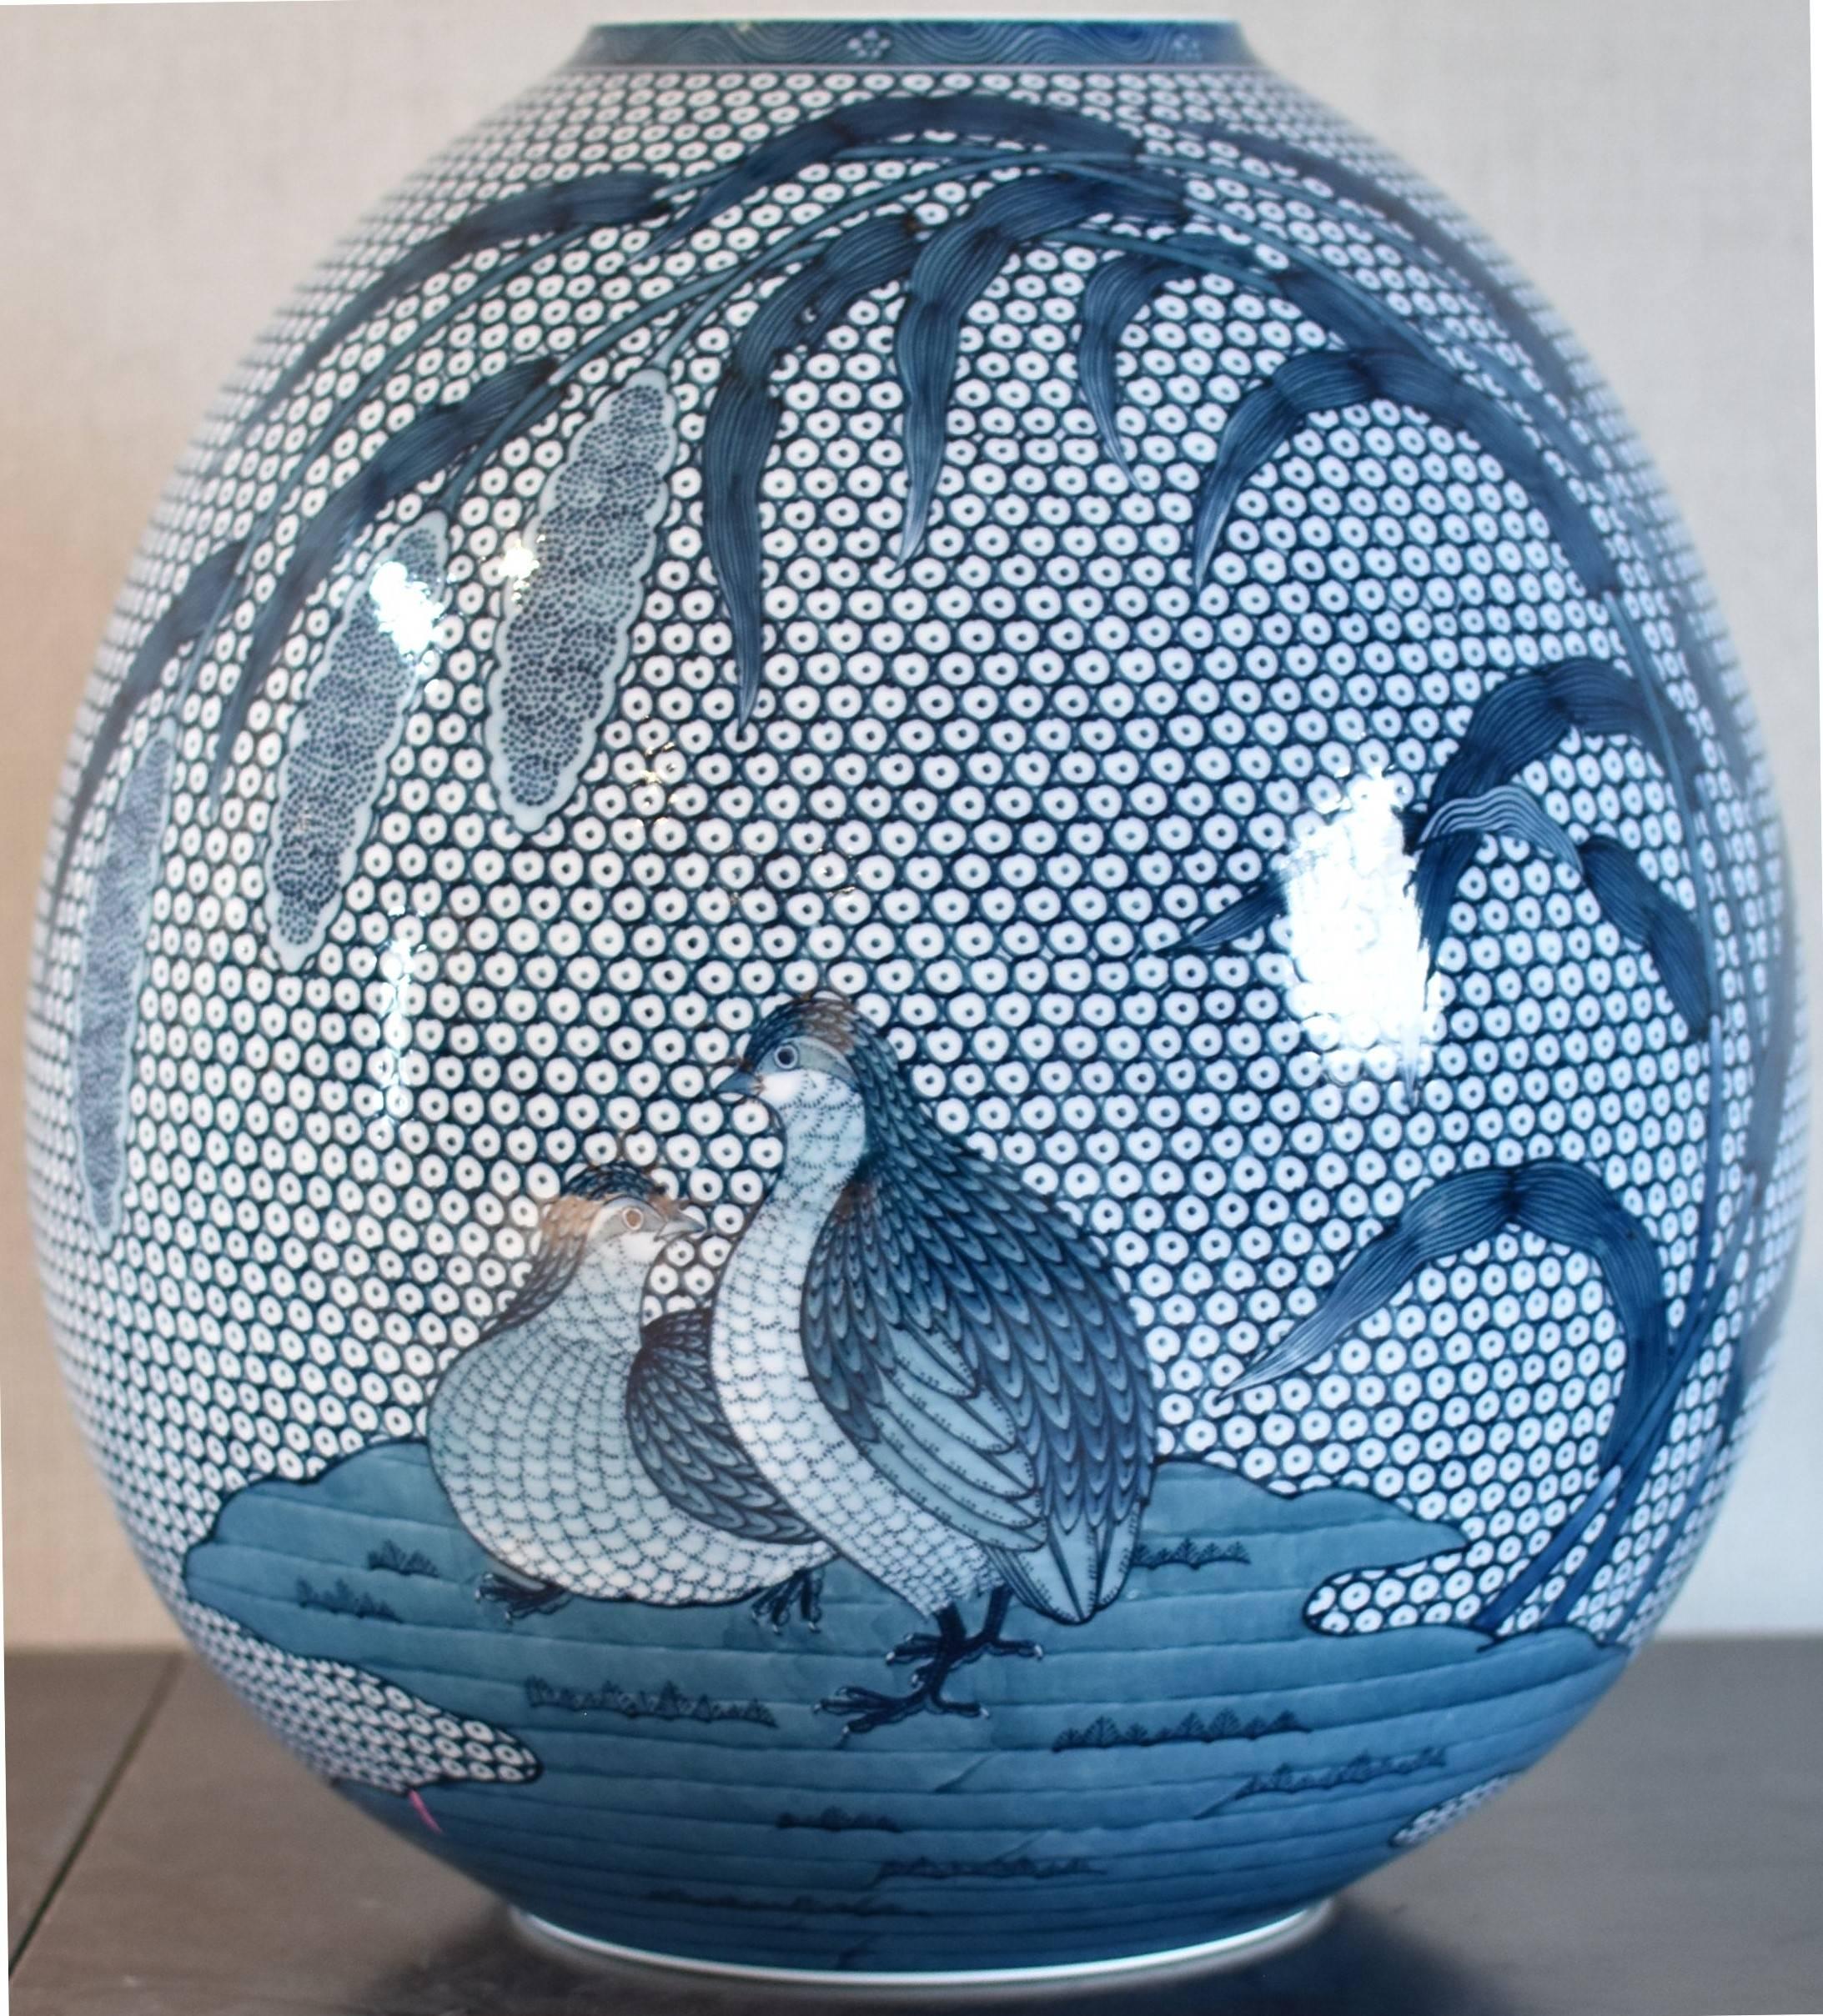 Japanese Imari Hand Painted Blue Porcelain Vase by Contemporary Master Artist 3